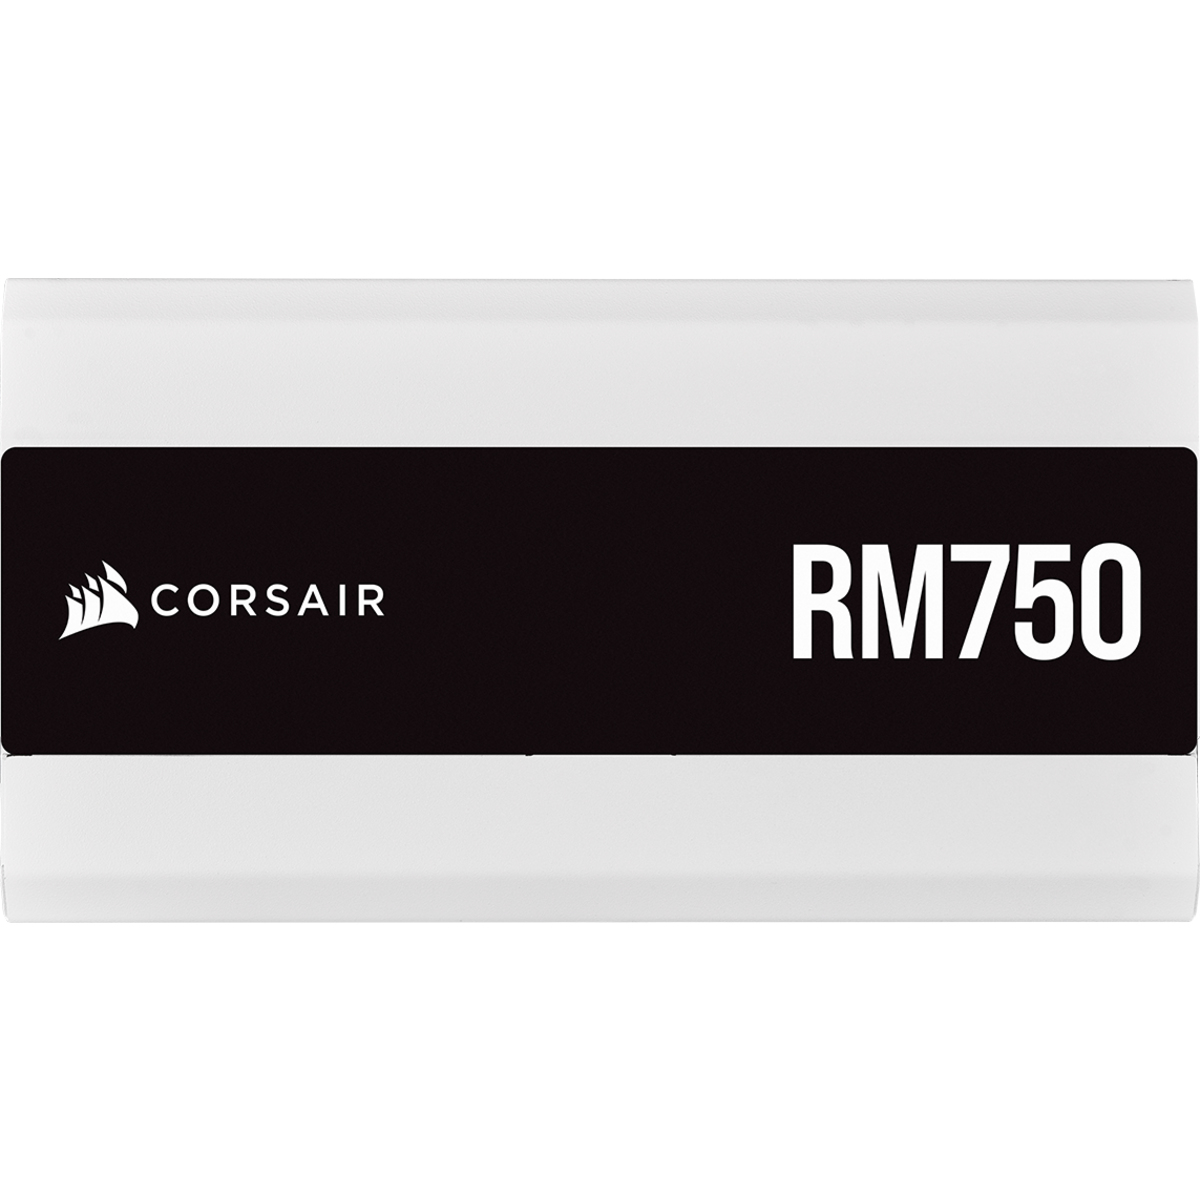 CORSAIR RM750 80 plus gold RPS0119-